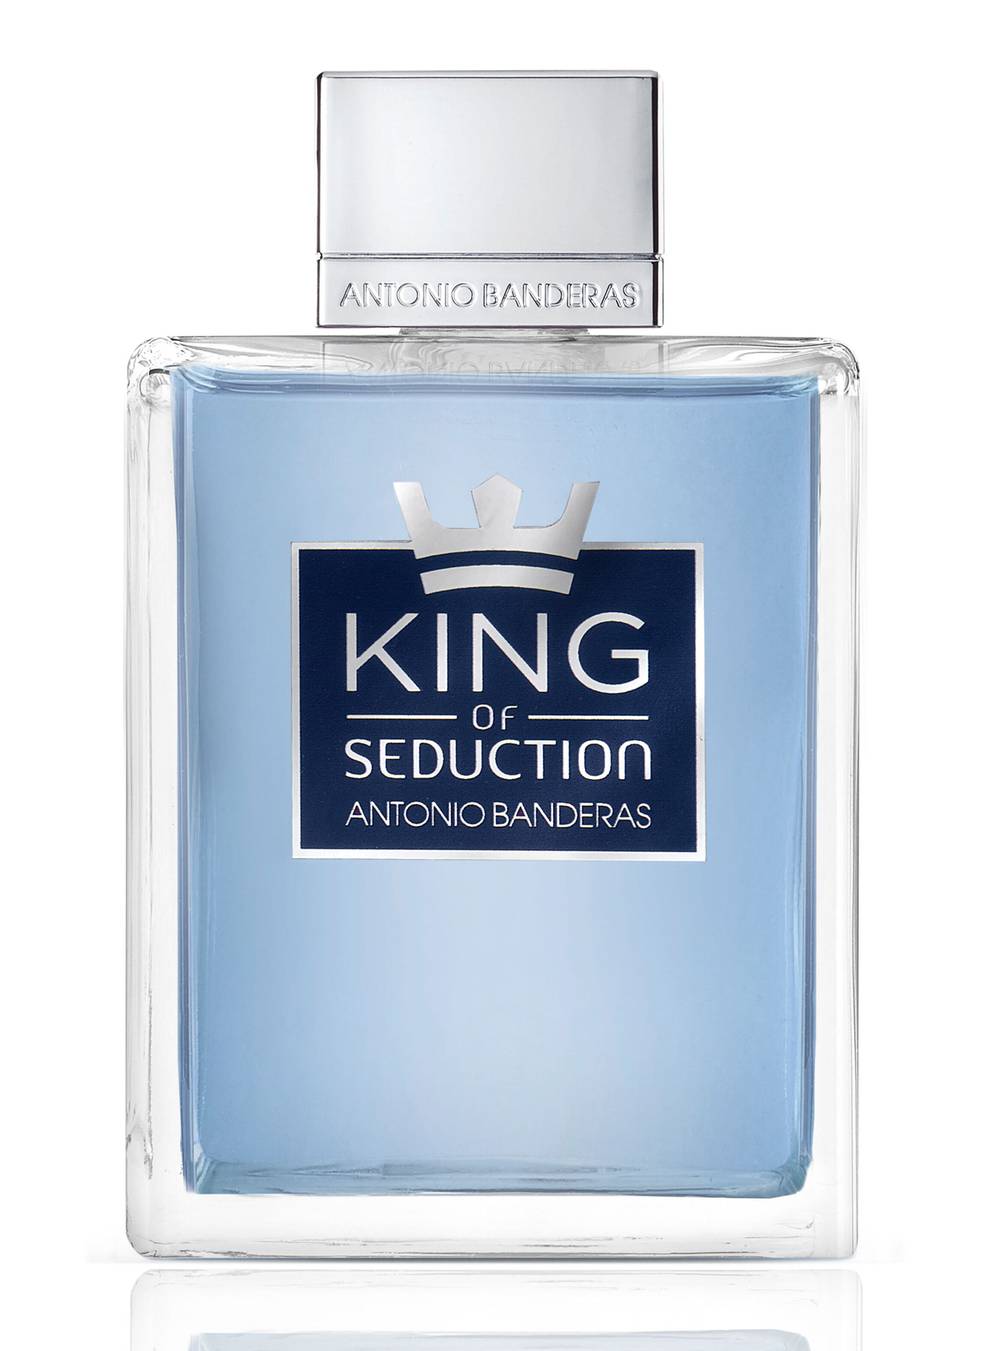 Antonio banderas perfume king of seduction hombre edt (botella 200 ml)